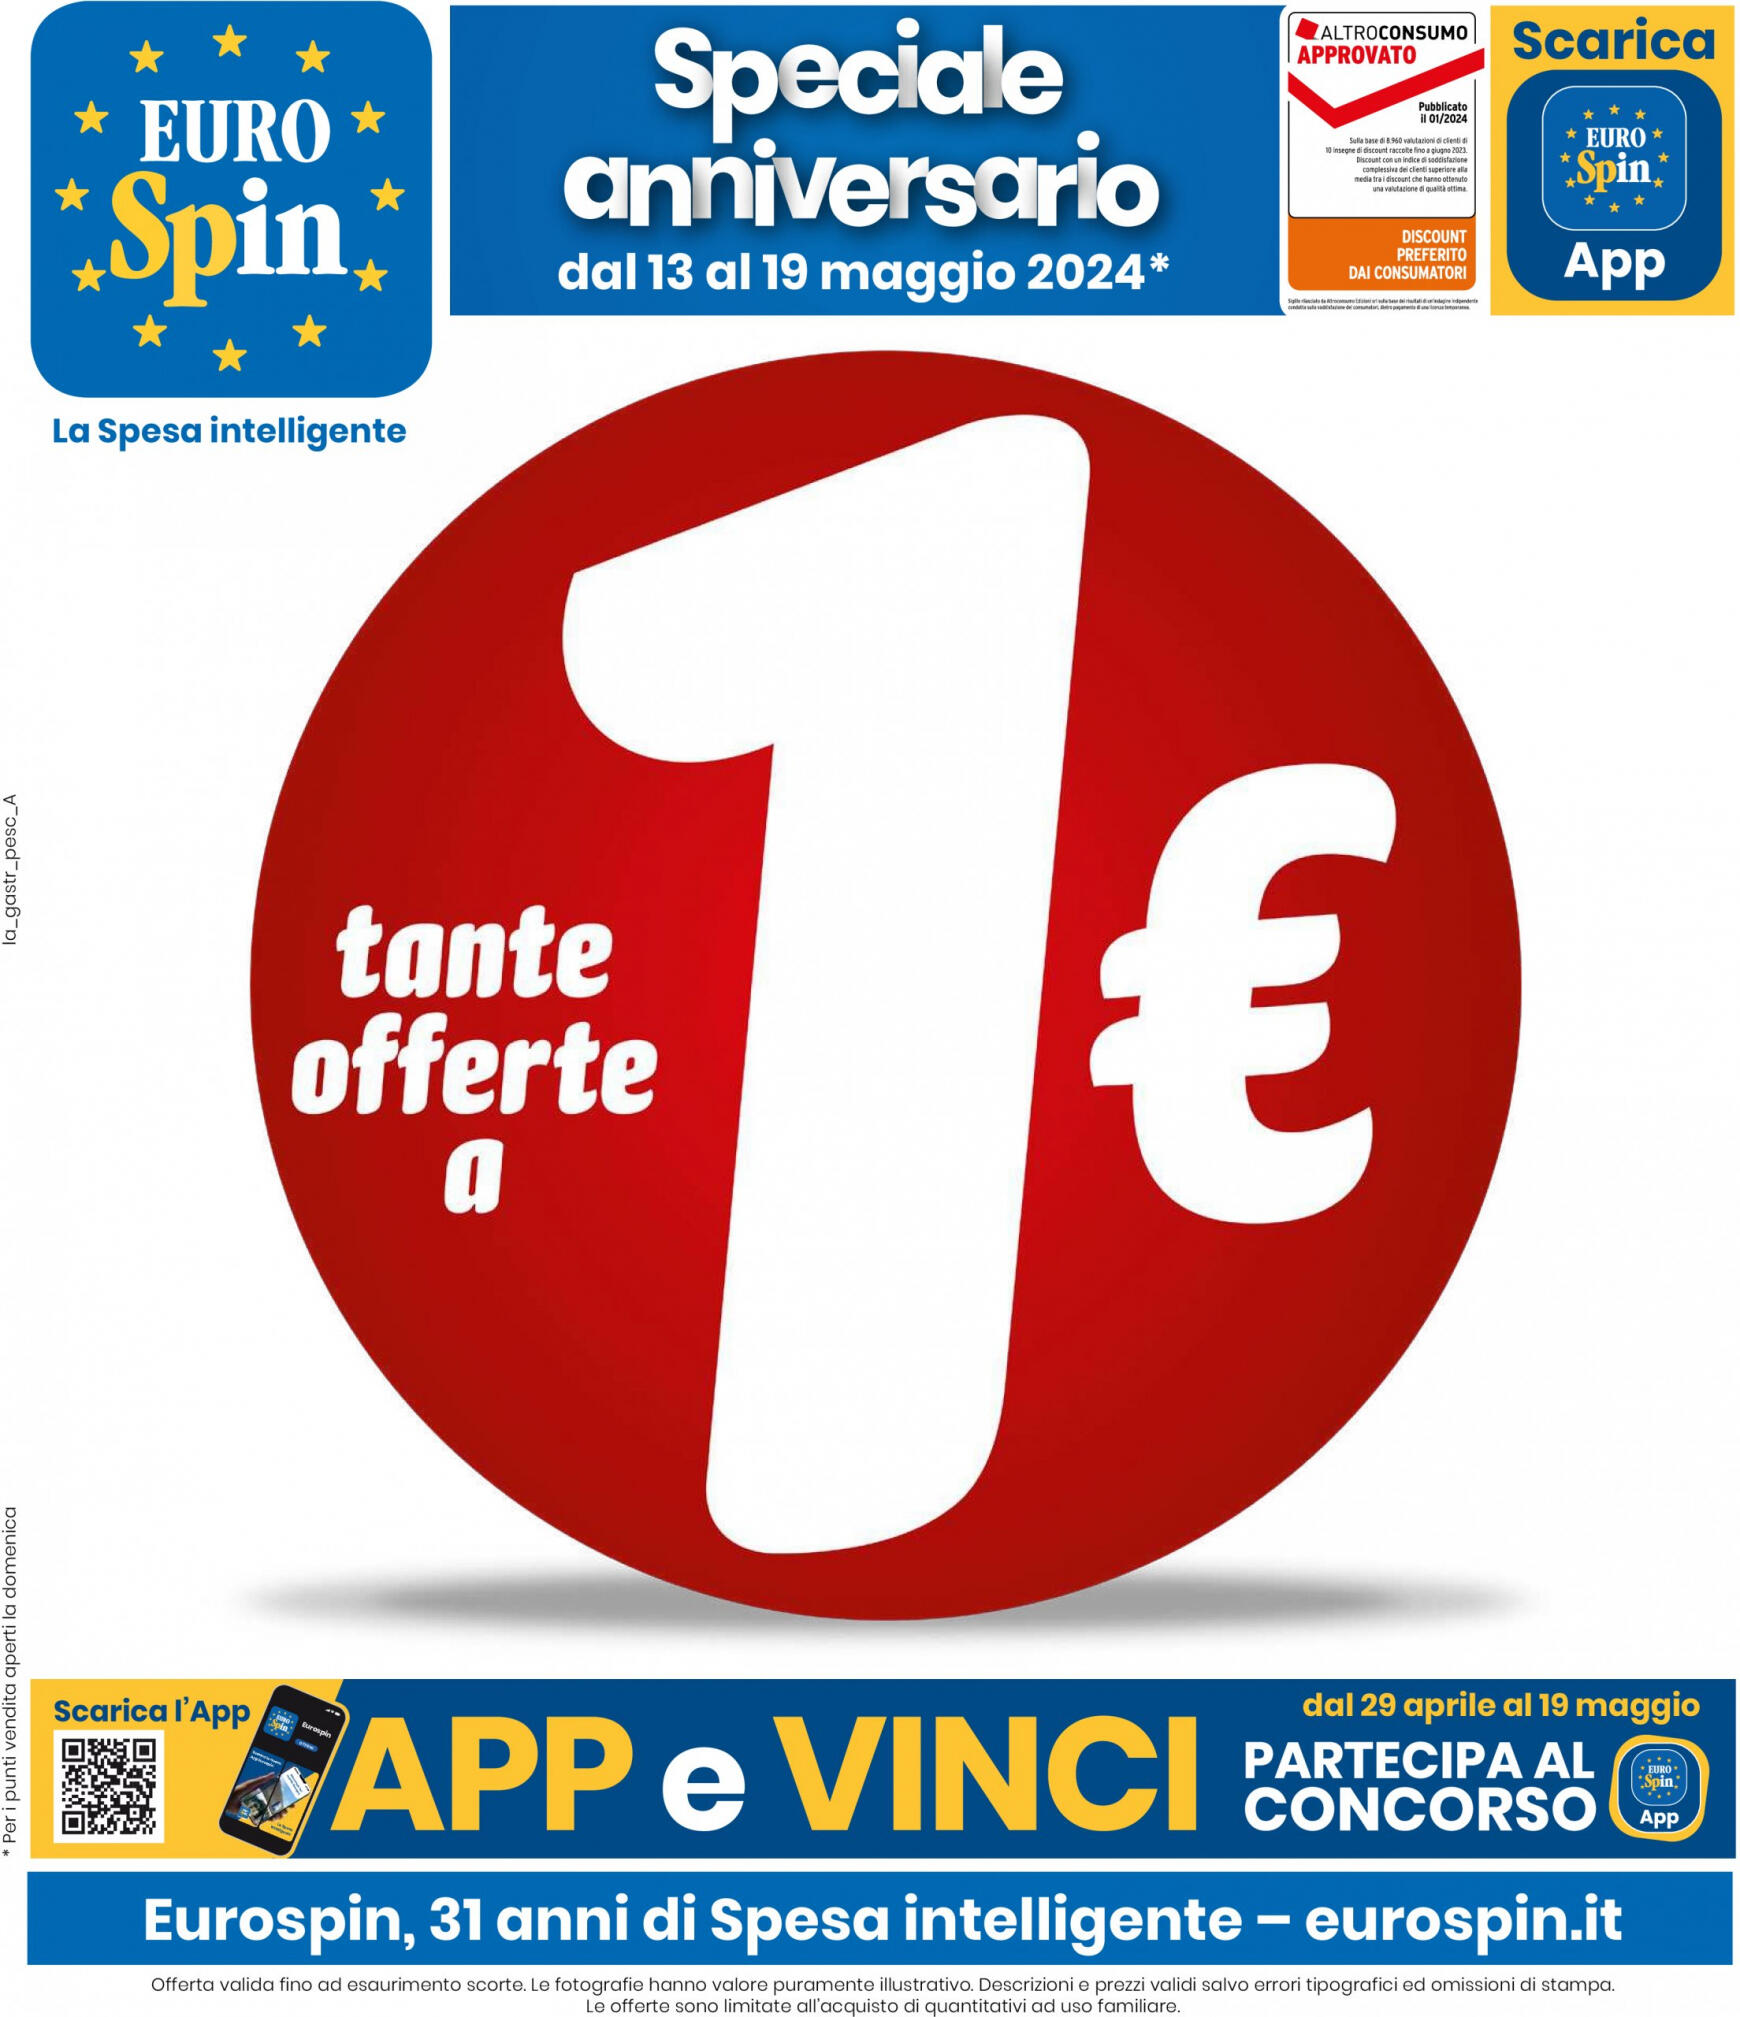 eurospin - Nuovo volantino Eurospin 13.05. - 19.05. - page: 1